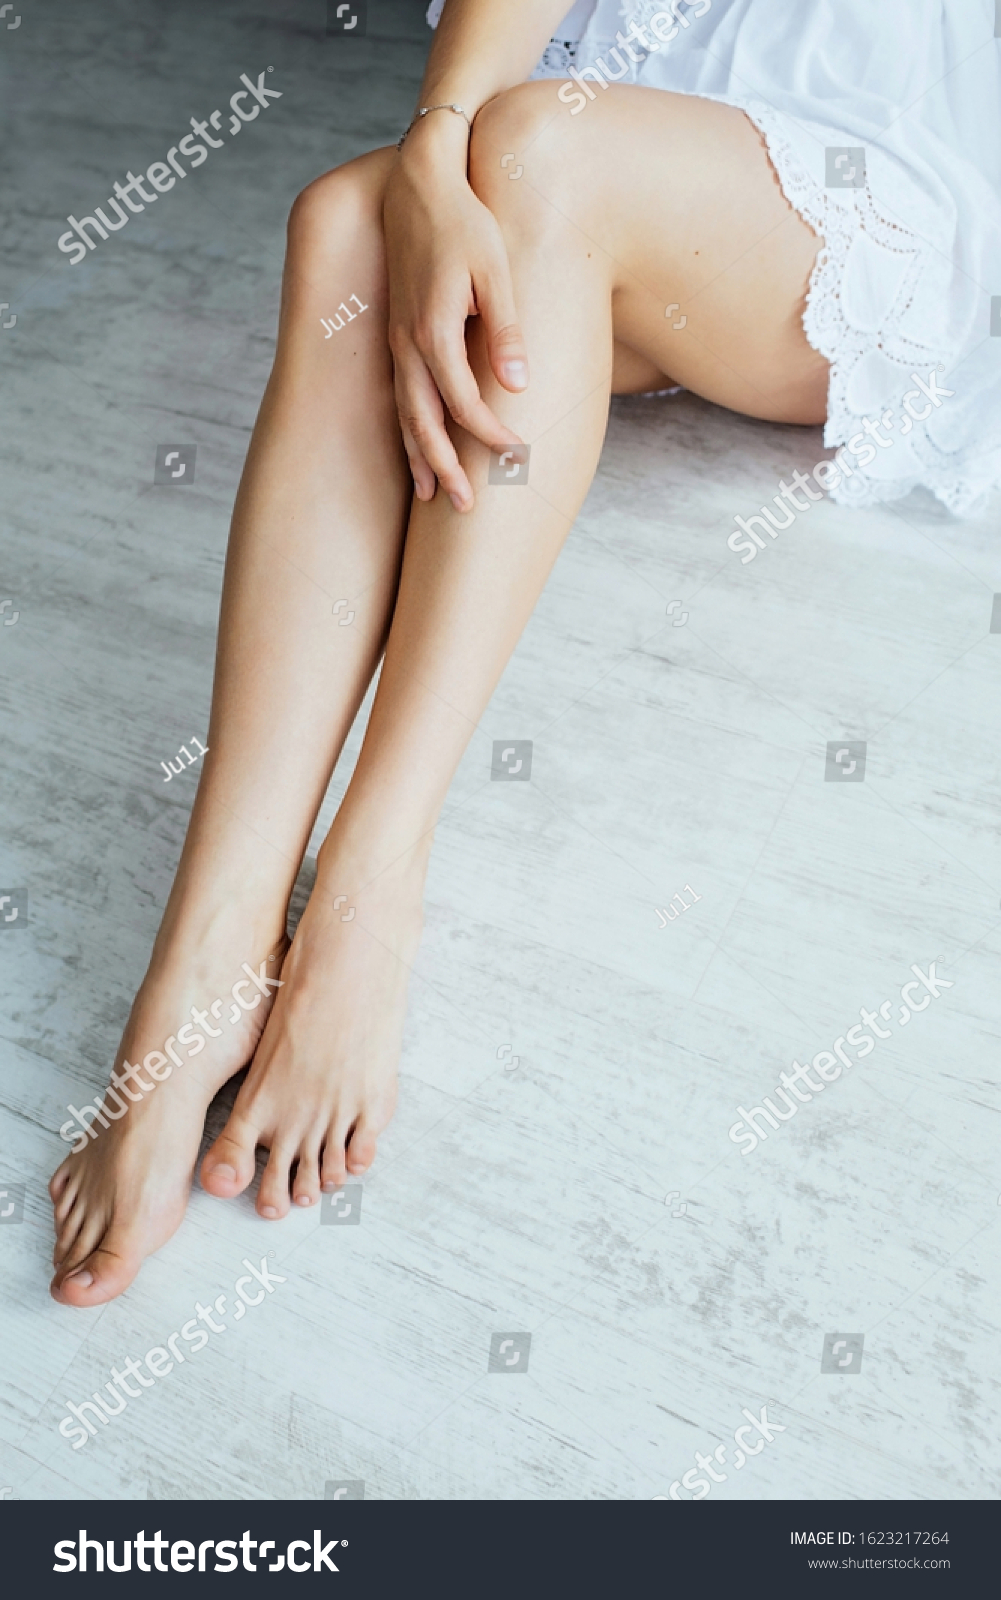 Pics Of Sexy Legs